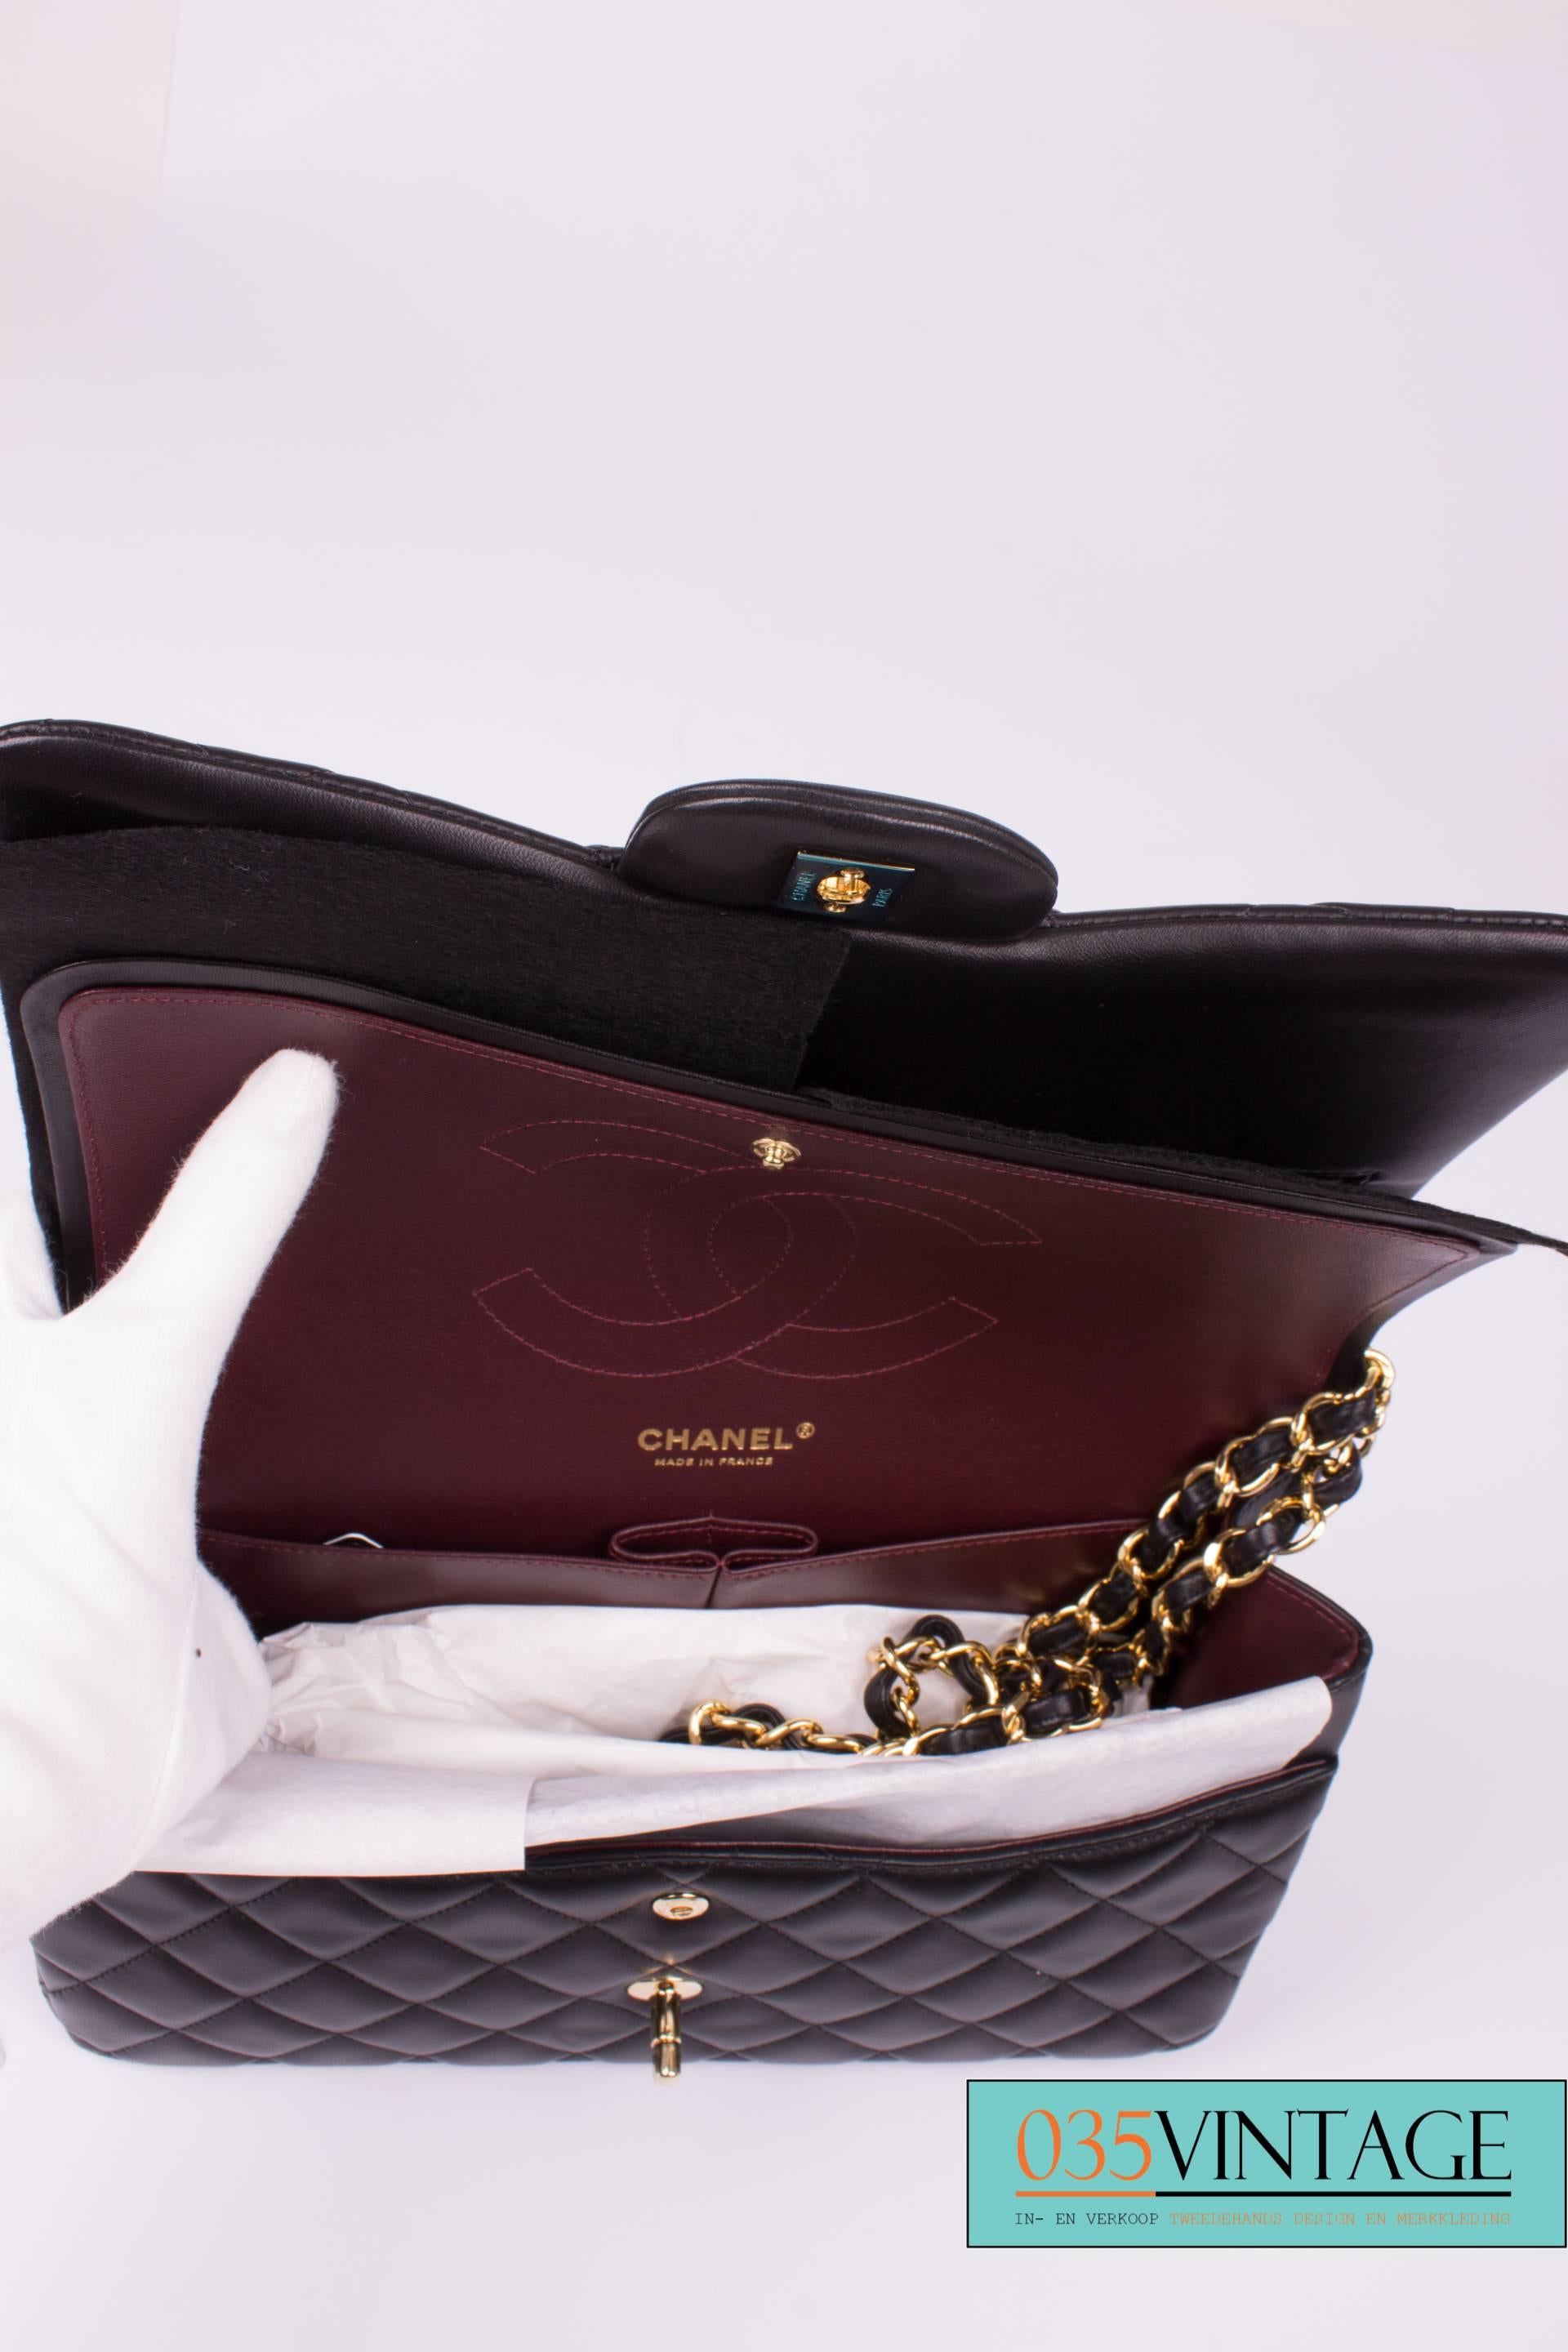 Black Chanel Timeless Classic Double Flap Bag Jumbo - black leather - new! 